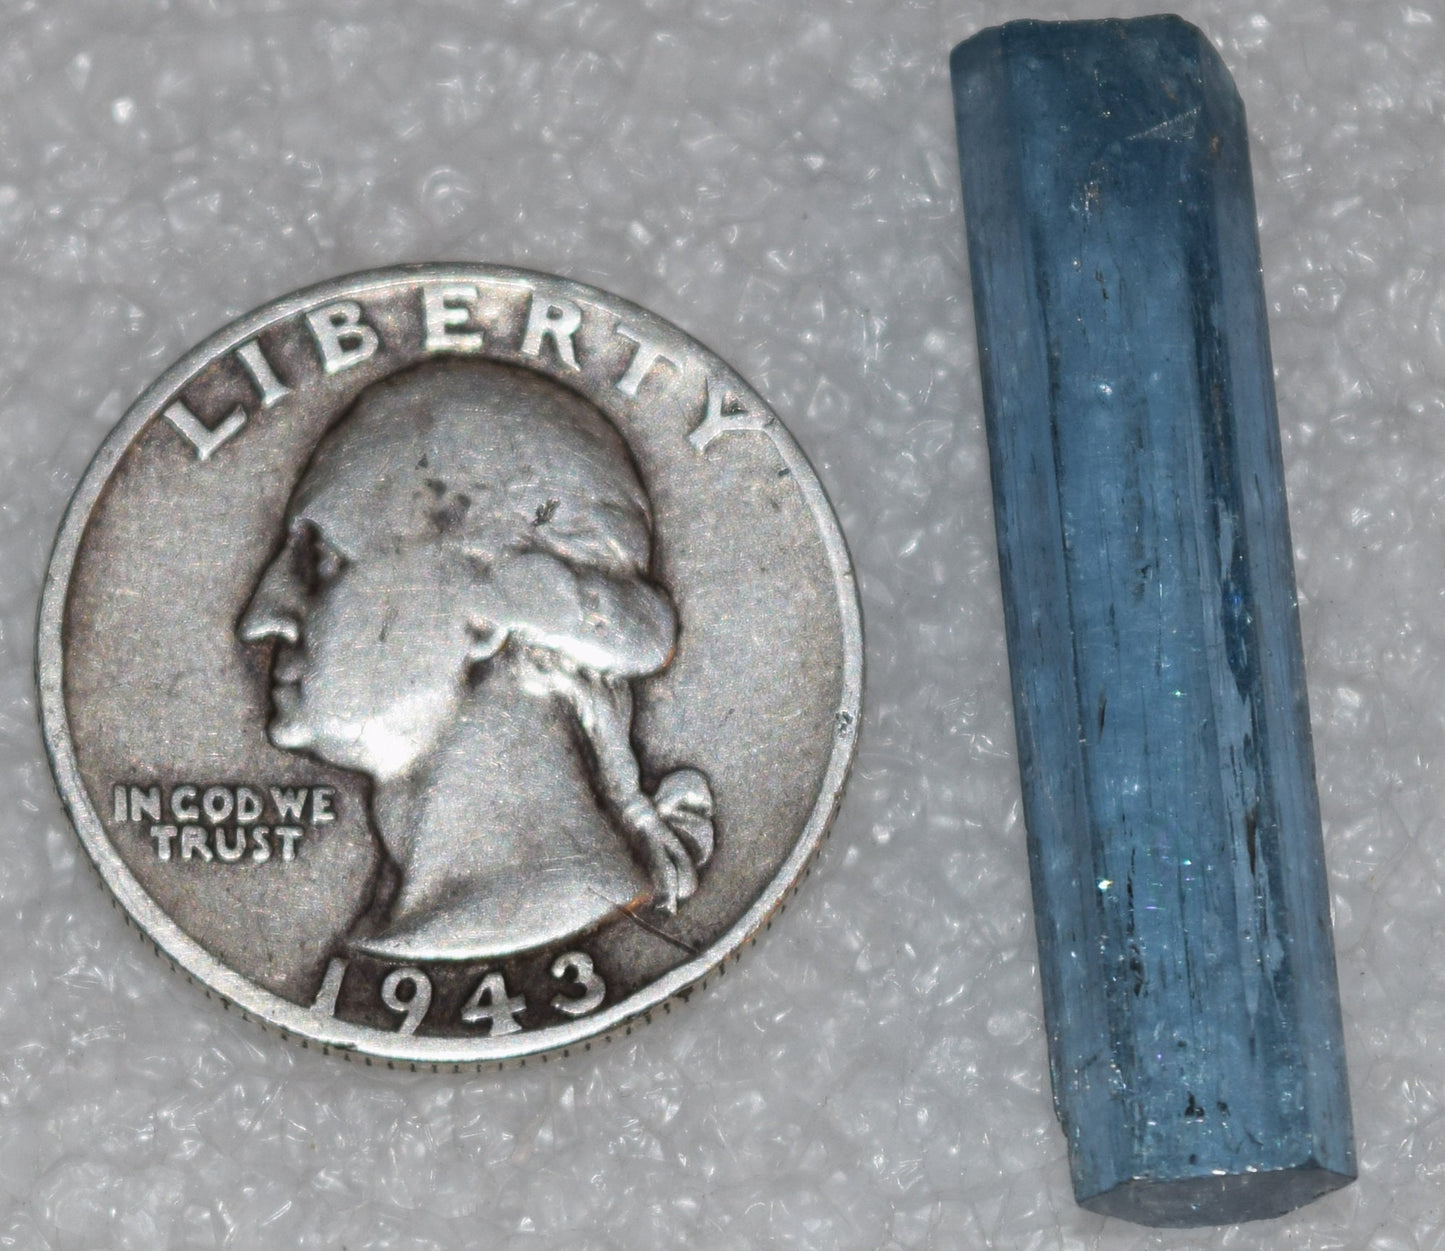 Santa Maria blue, Vietnamese Aquamarine crystal - nearly eye clean, nearly 20 carats!